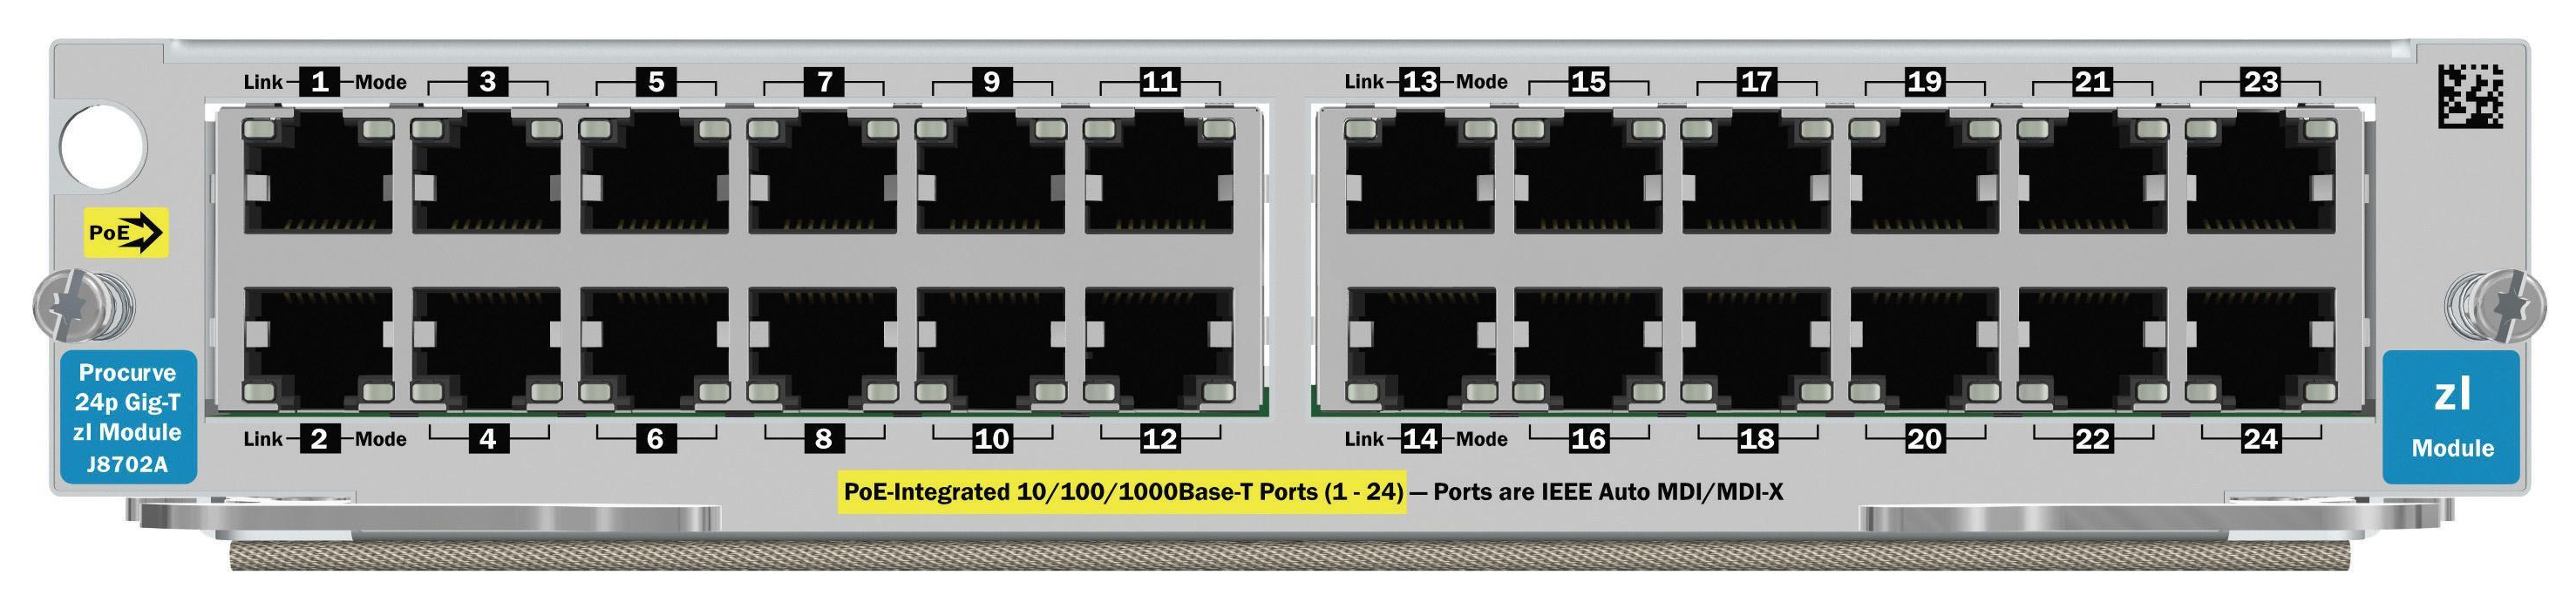 J8702A HP ProCurve 5400zl 24-Ports 10/100/1000 PoE Integrated Switch Expansion Module (Refurbished)